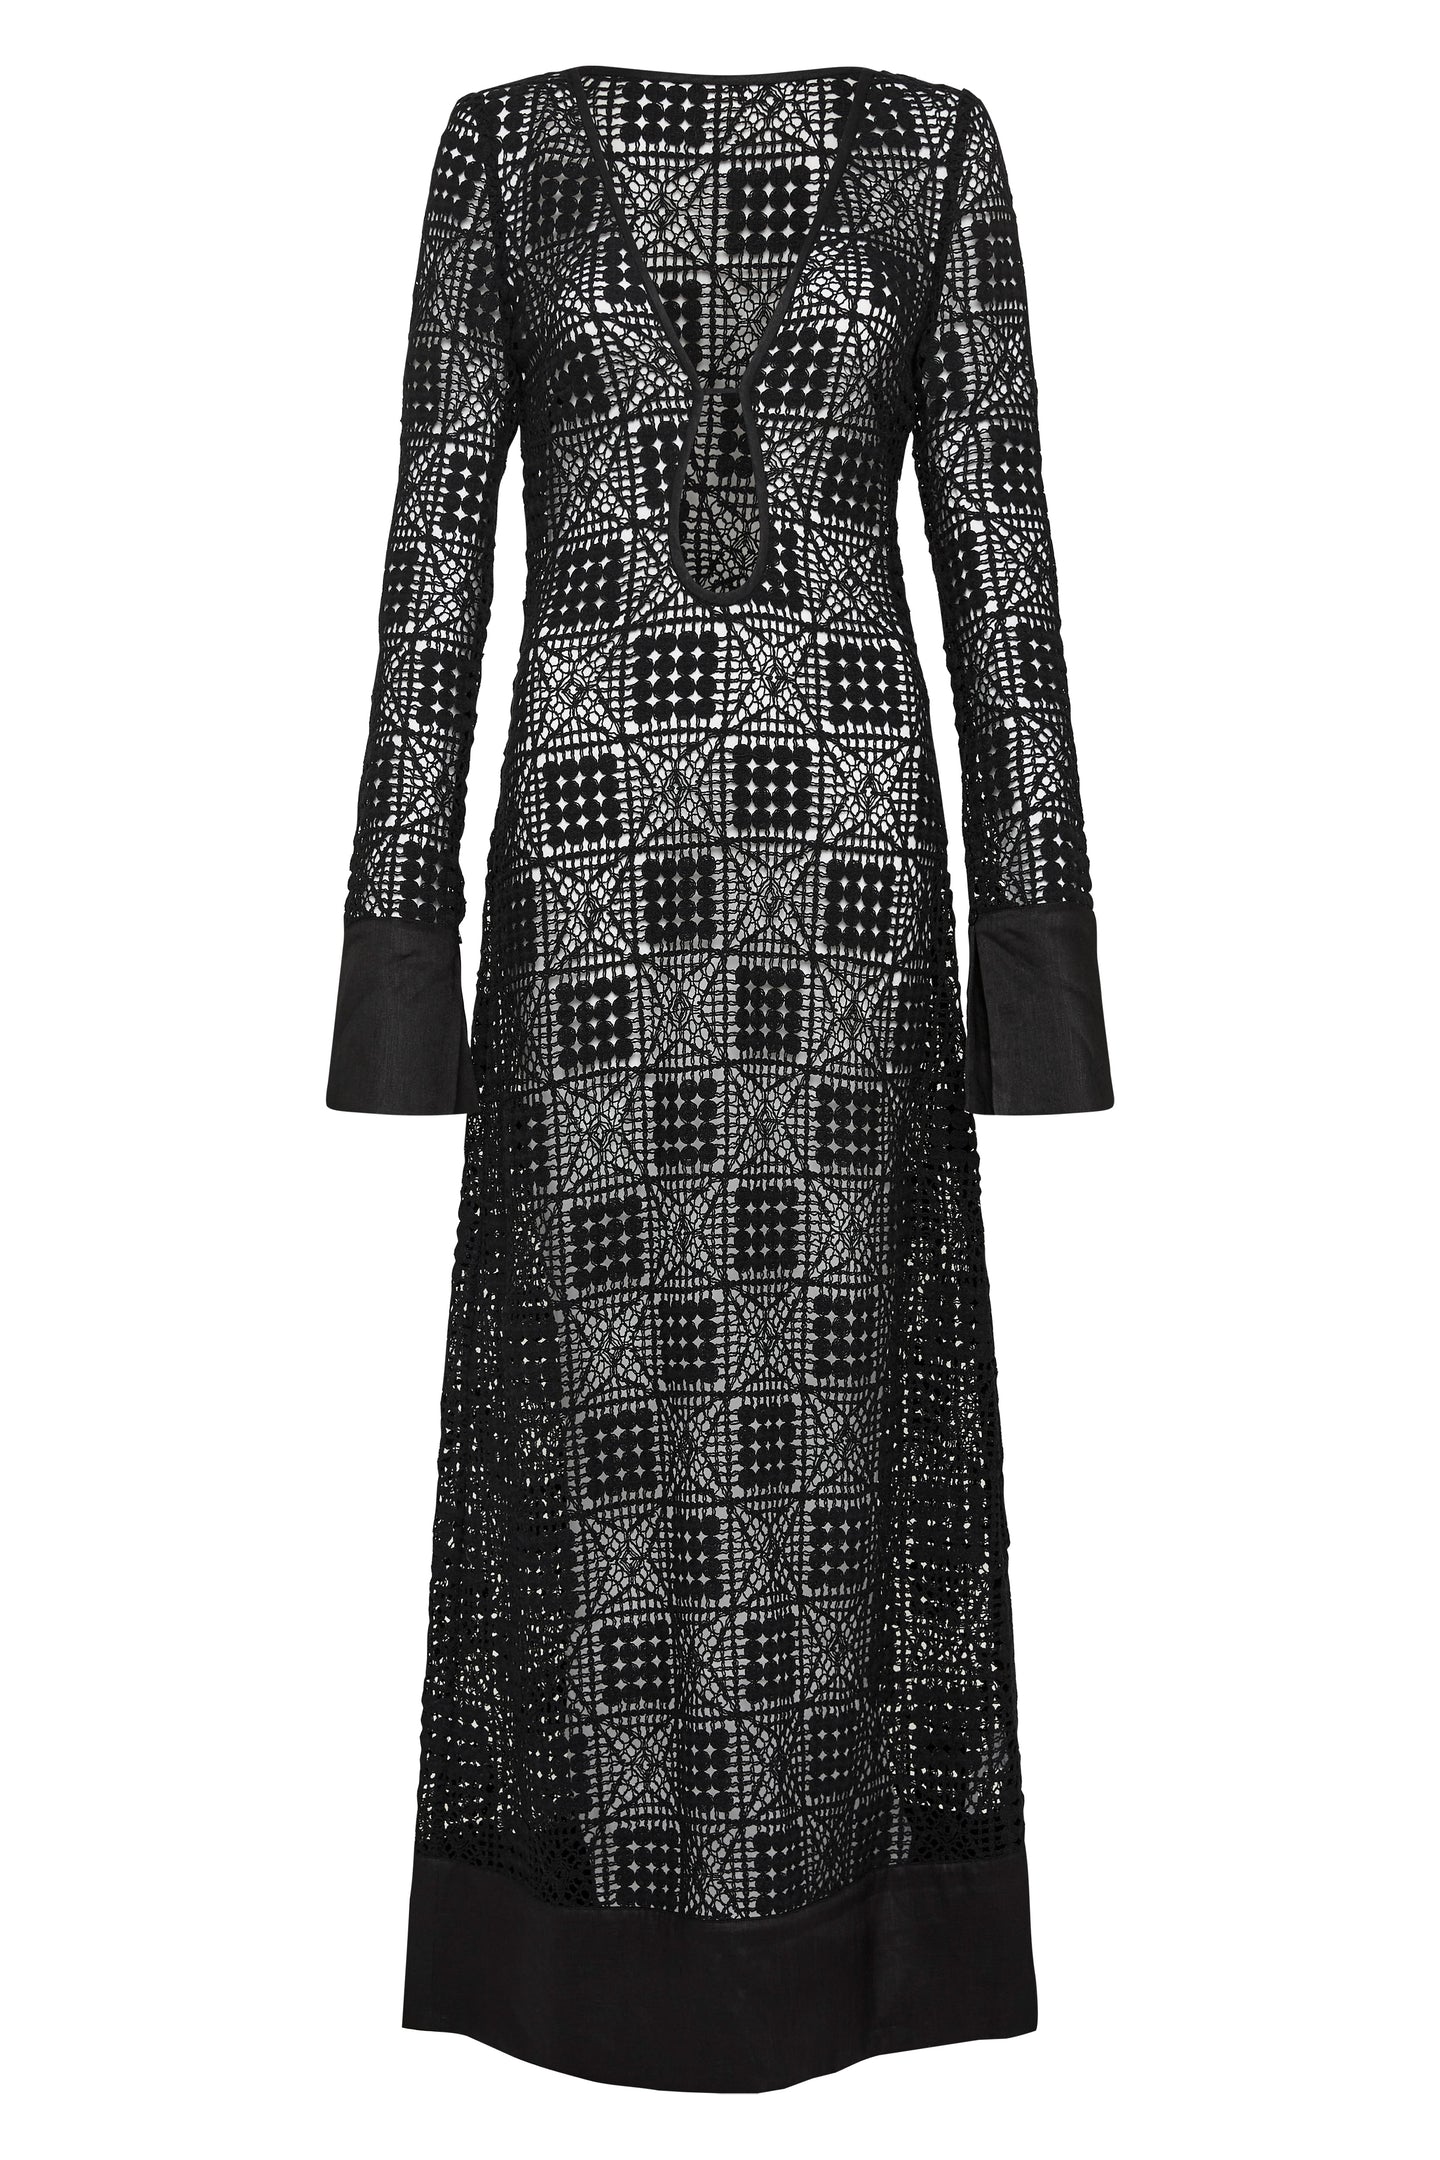 SIR the label Rayure Long sleeve Maxi Dress Black Crochet